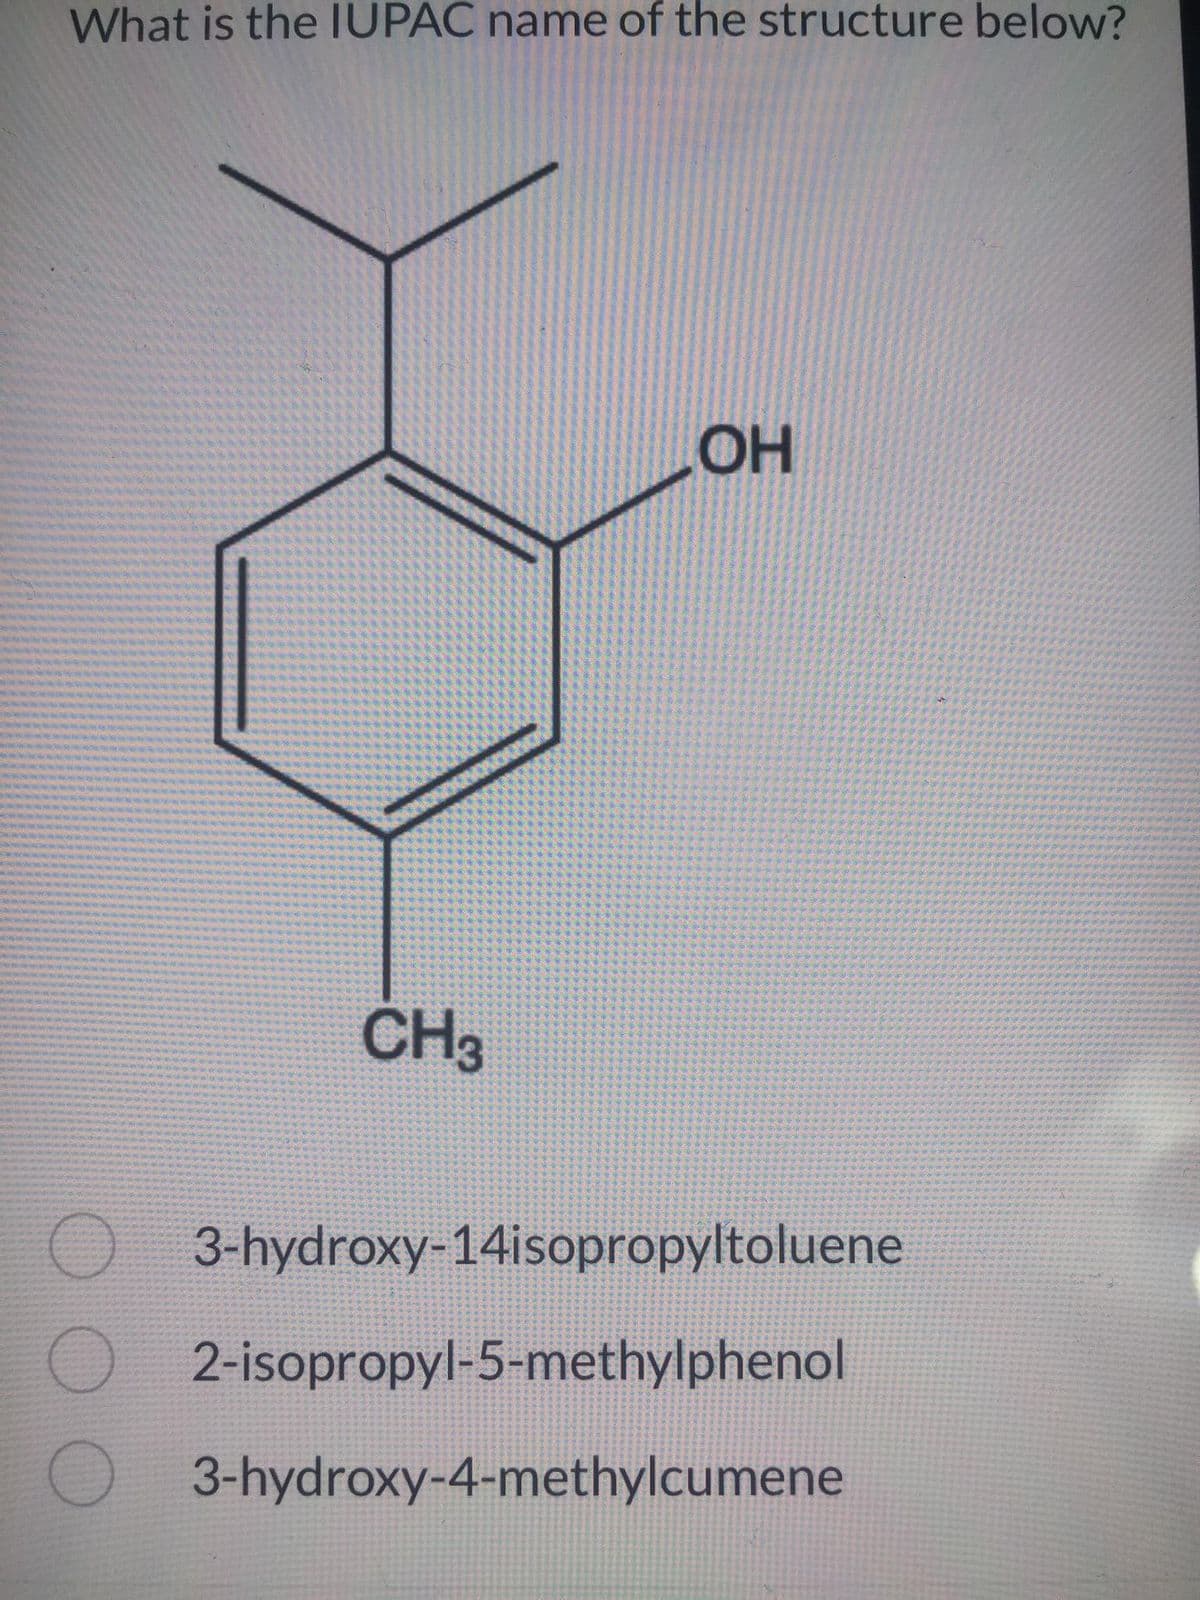 What is the IUPAC name of the structure below?
CH3
OH
O 3-hydroxy-14isopropyltoluene
2-isopropyl-5-methylphenol
O3-hydroxy-4-methylcumene